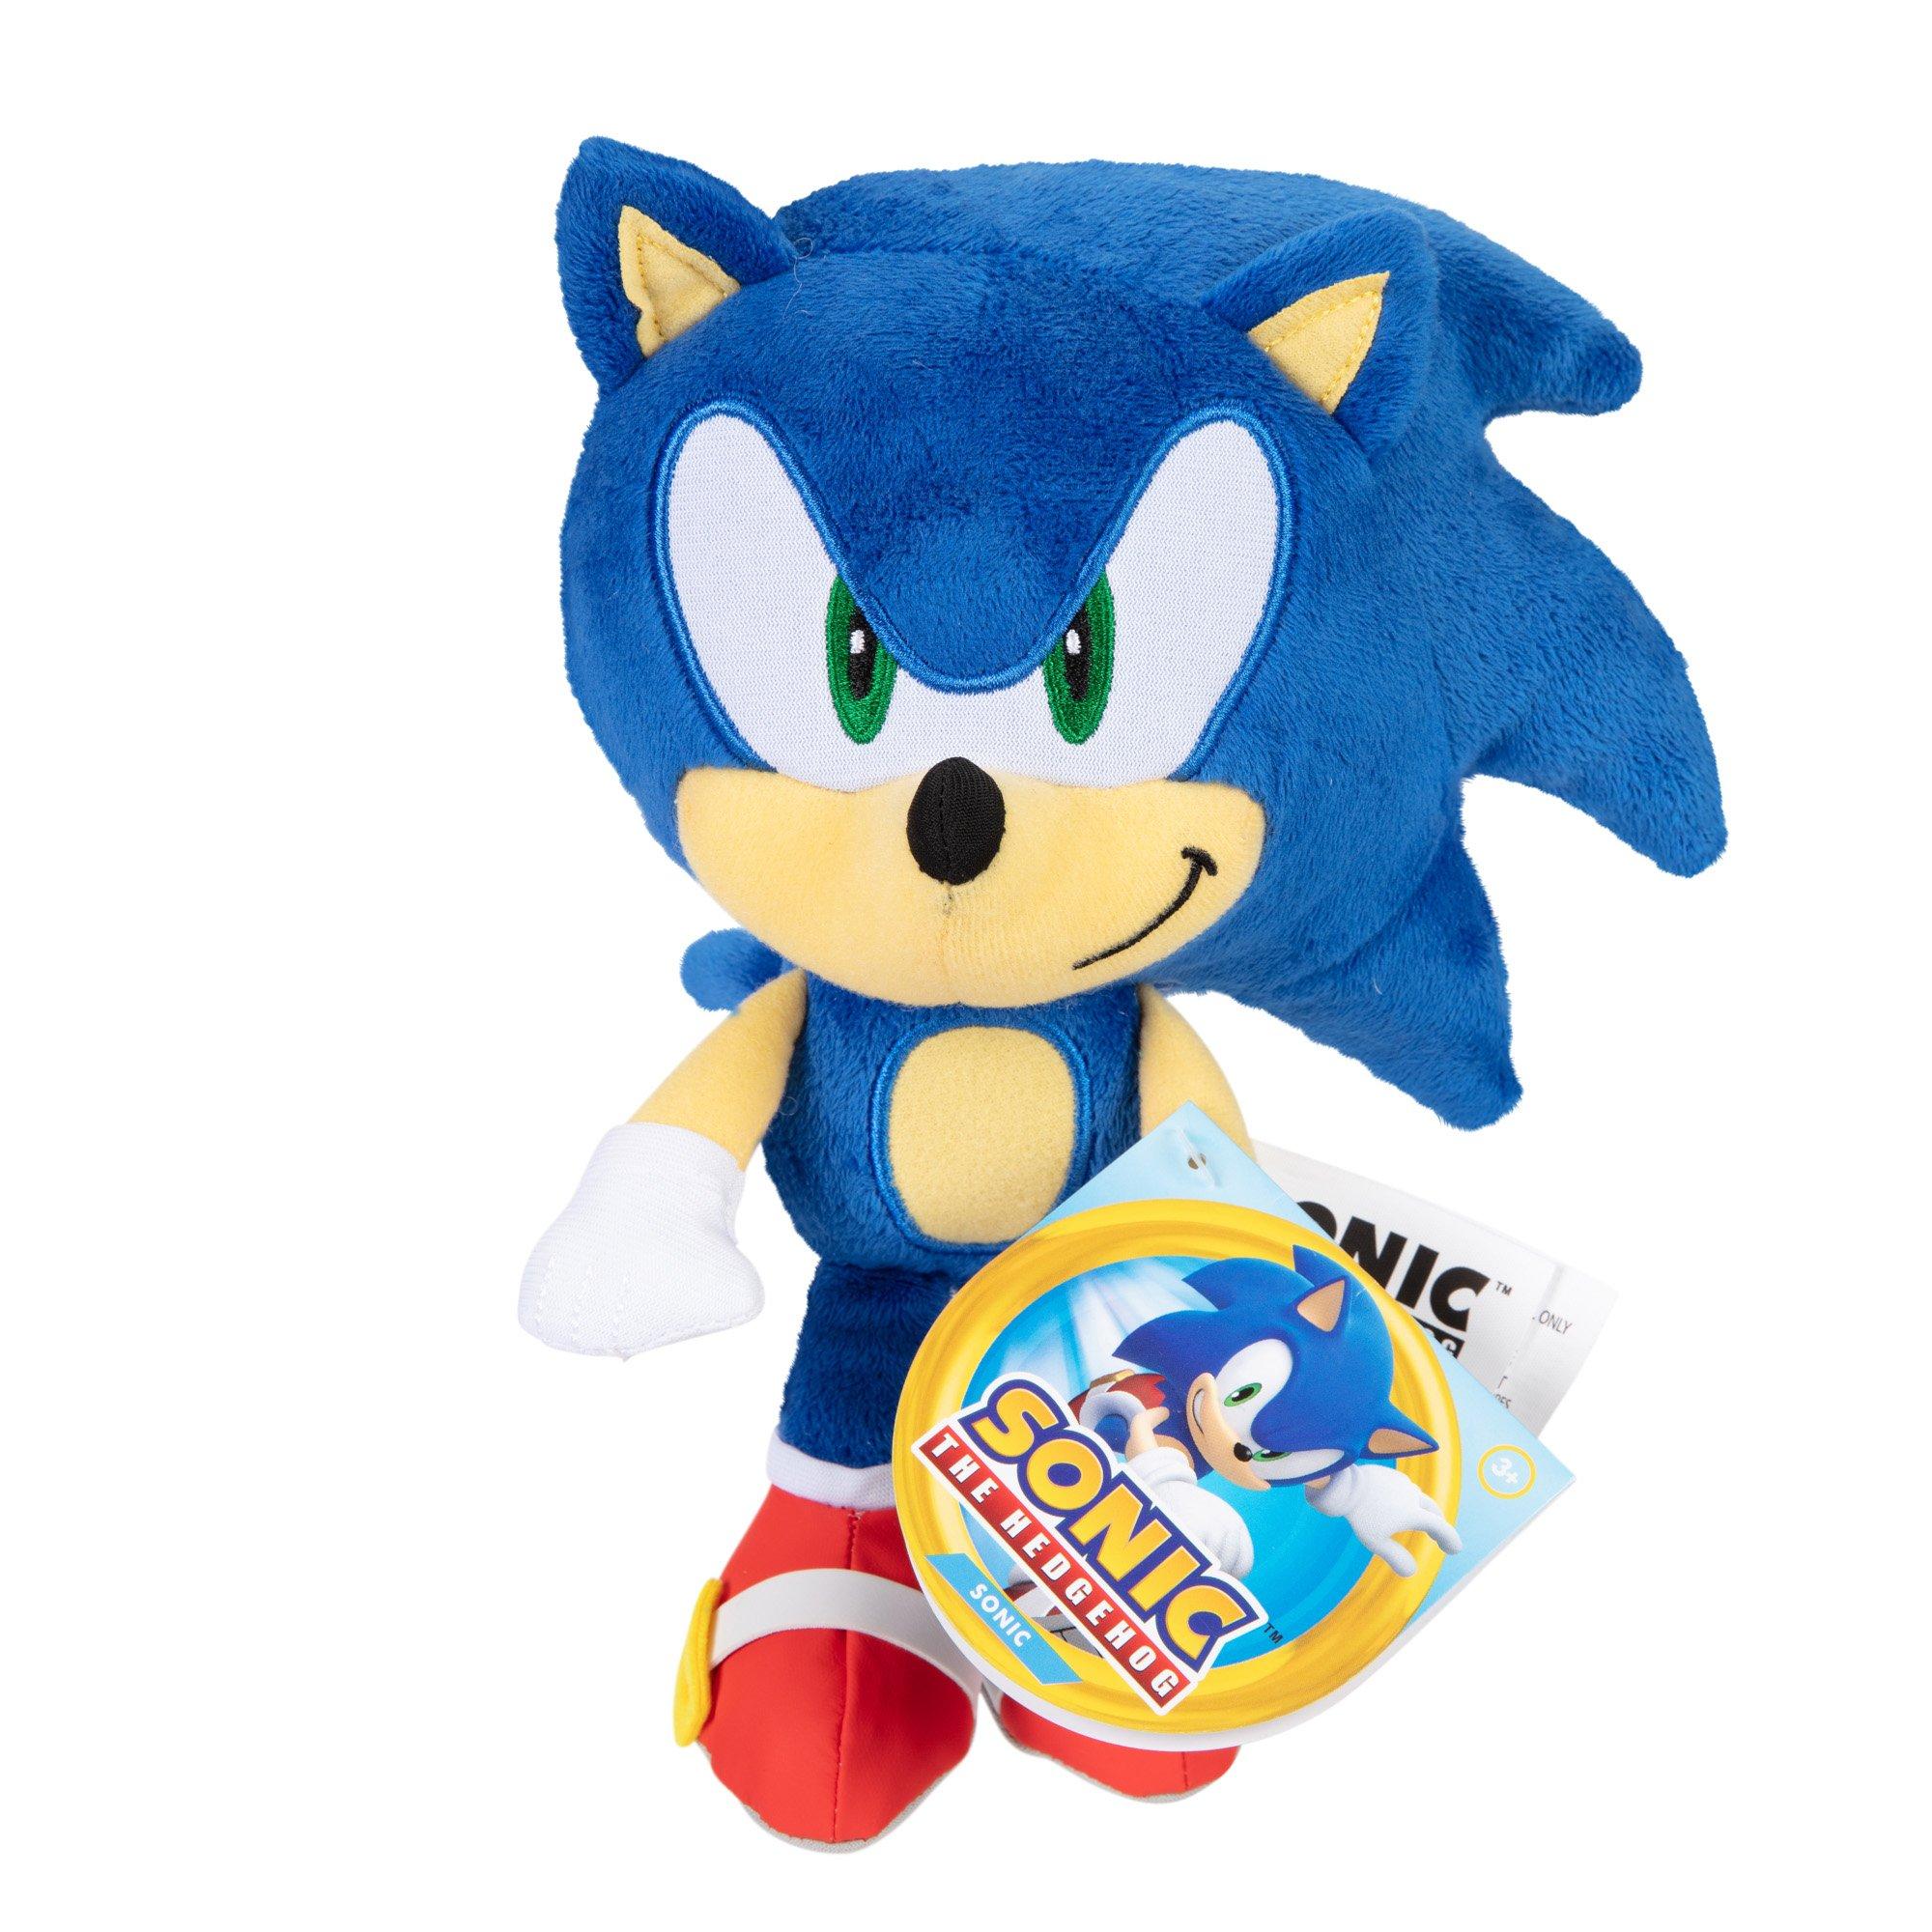 Sonic the Hedgehog 20th Anniv. 10-Inch Classic Sonic Figure